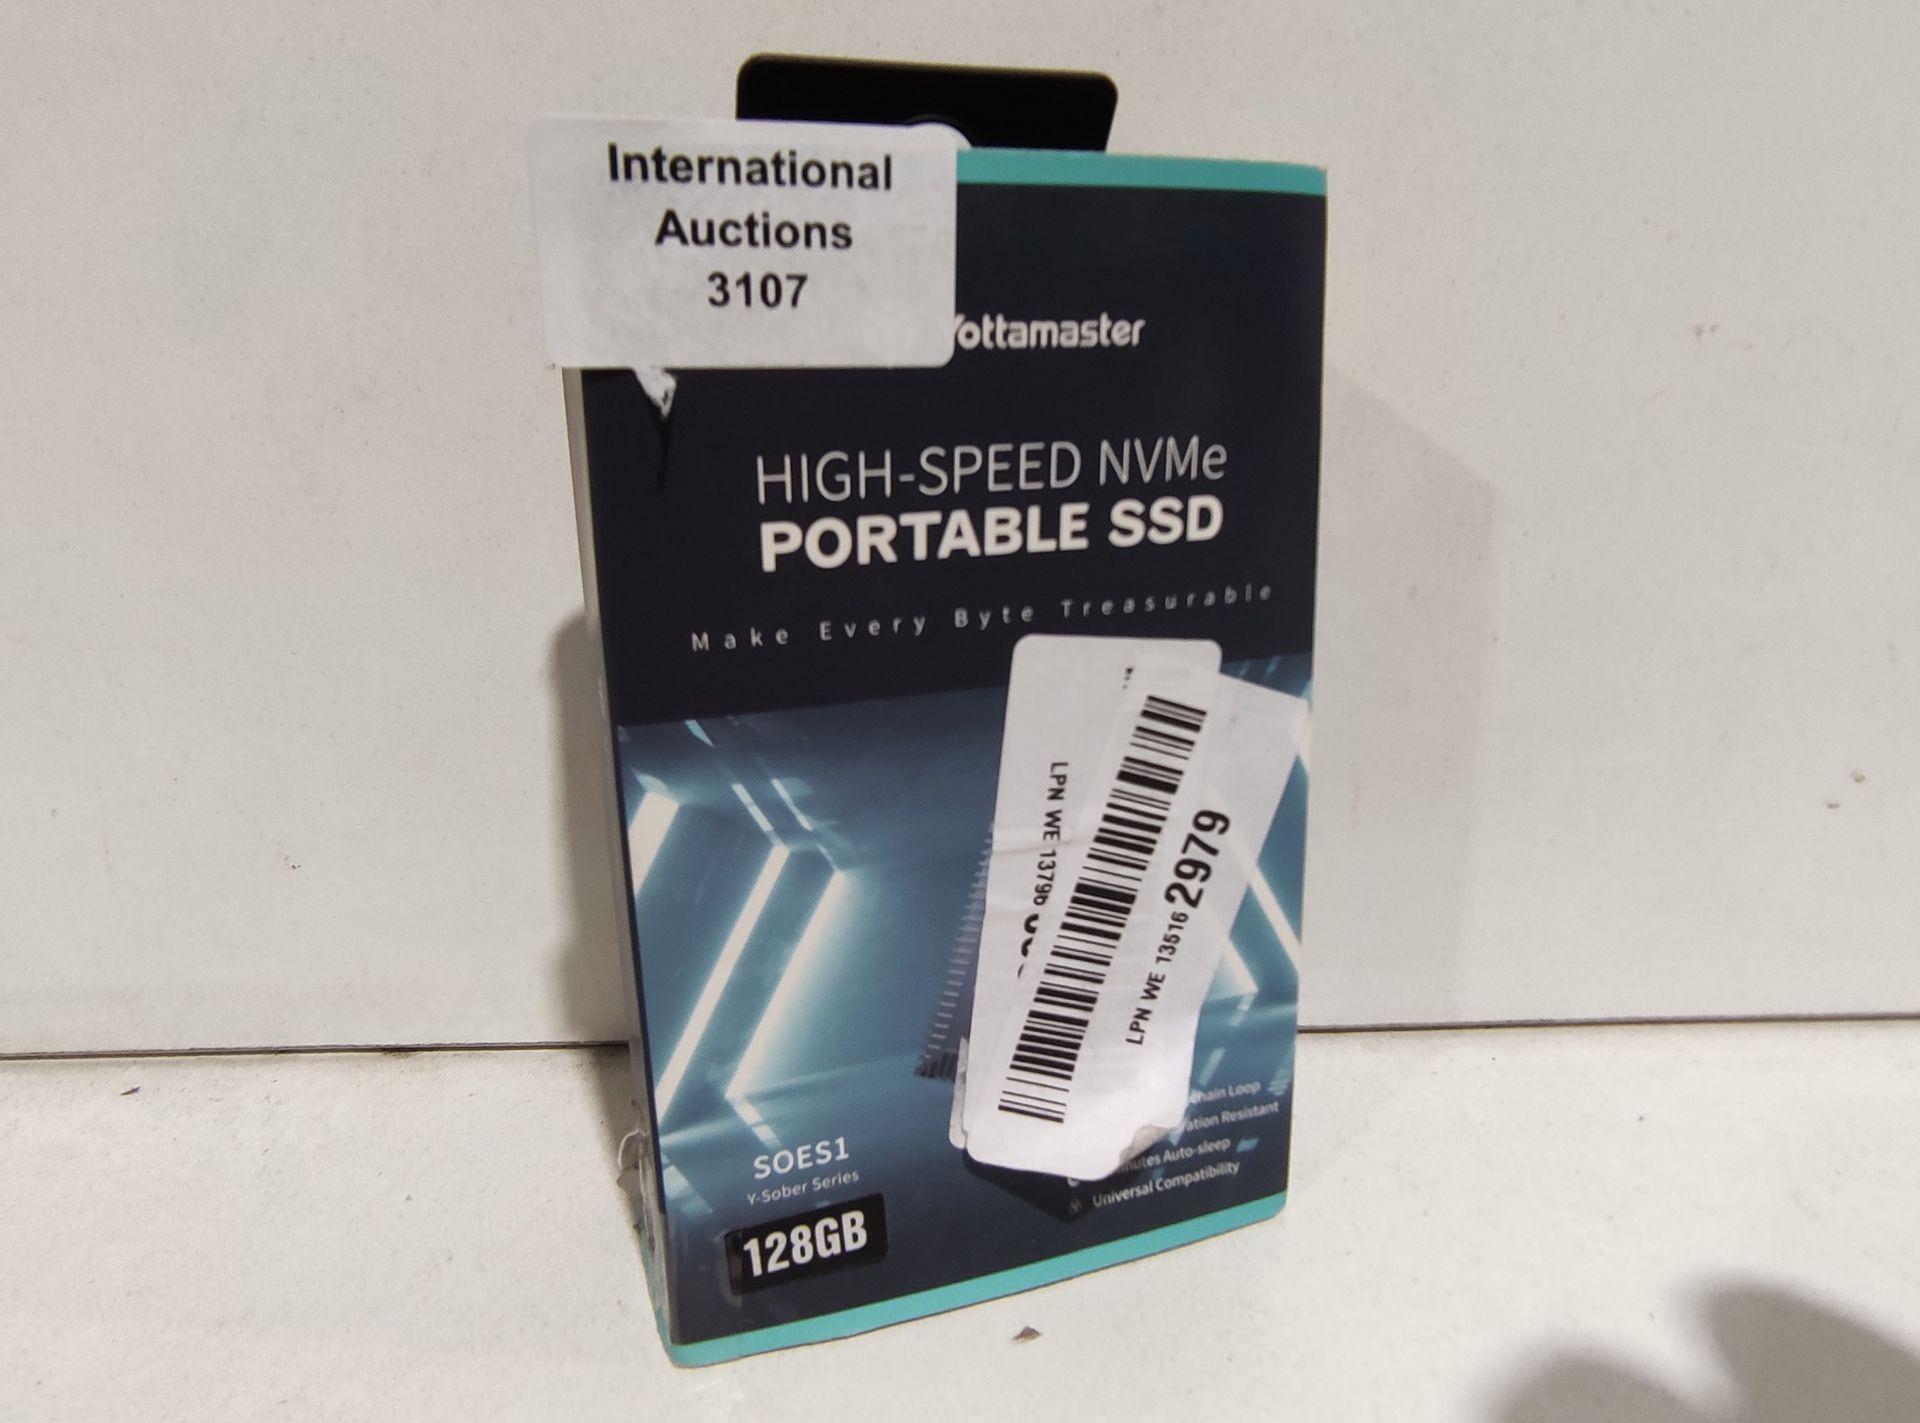 RRP £174.49 Yottamaster Portable SSD 1TB USB3.1 Gen2 Type-C External SSD - Image 2 of 2